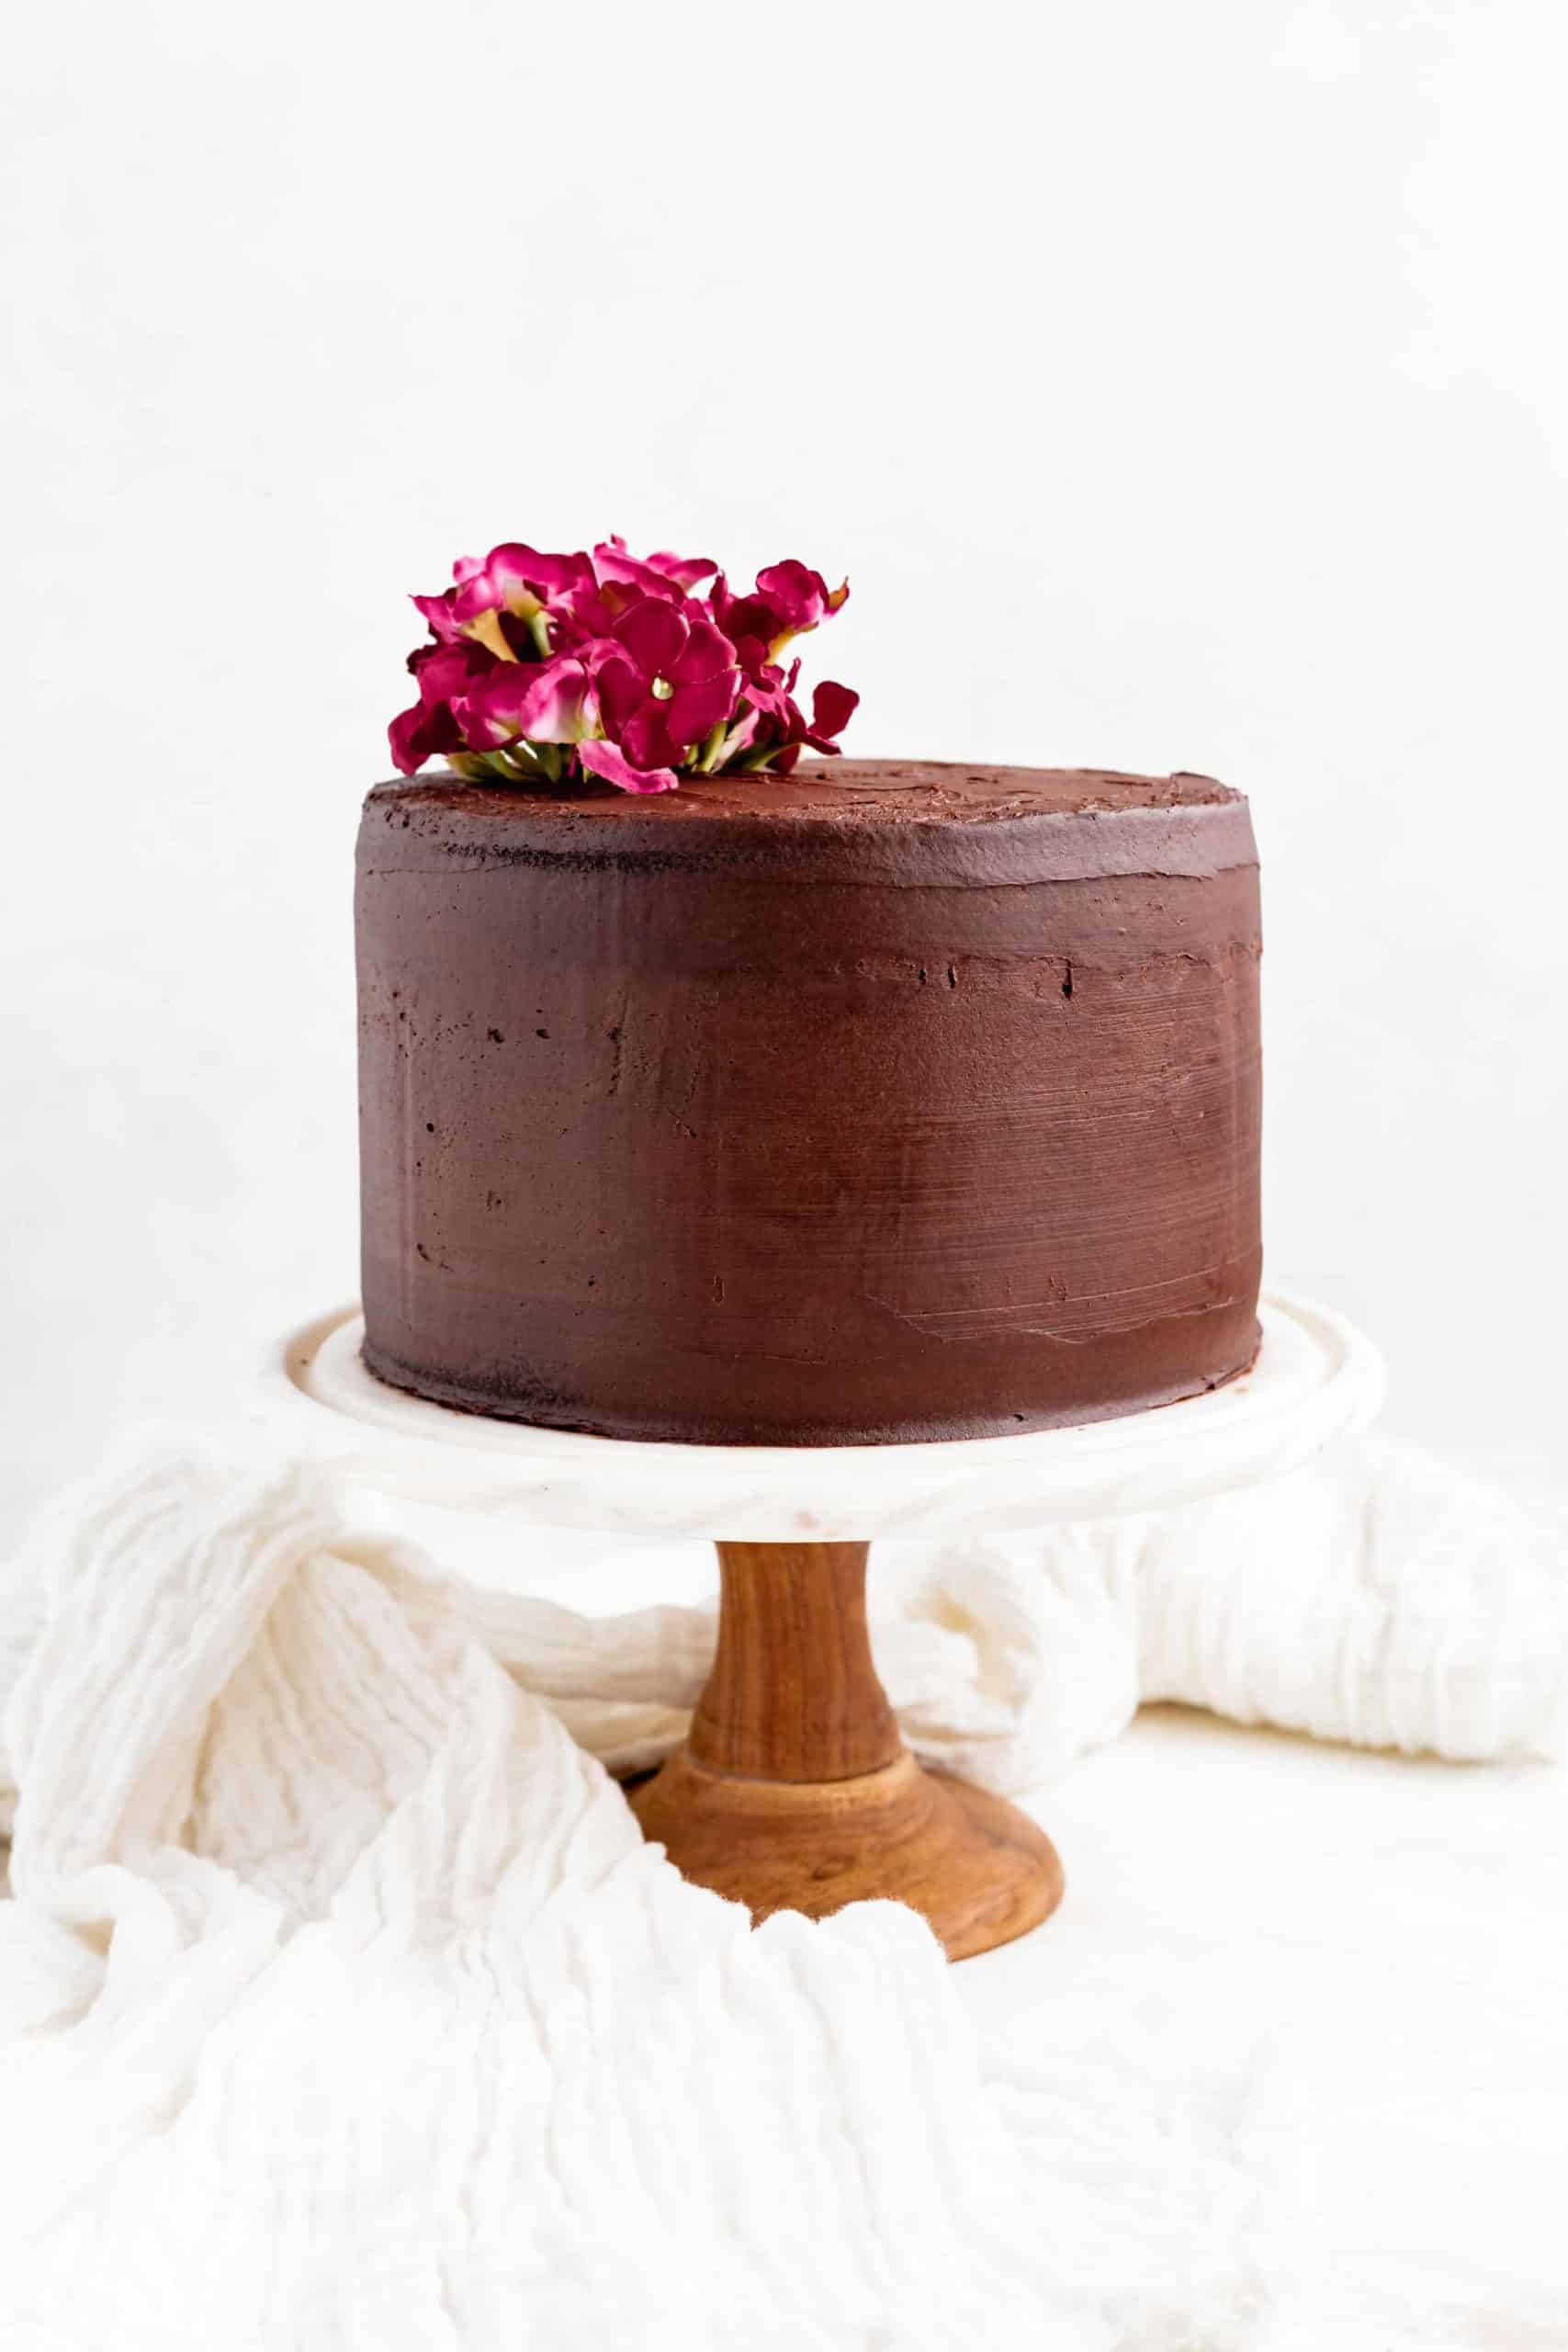 chocolate cake on cake stand